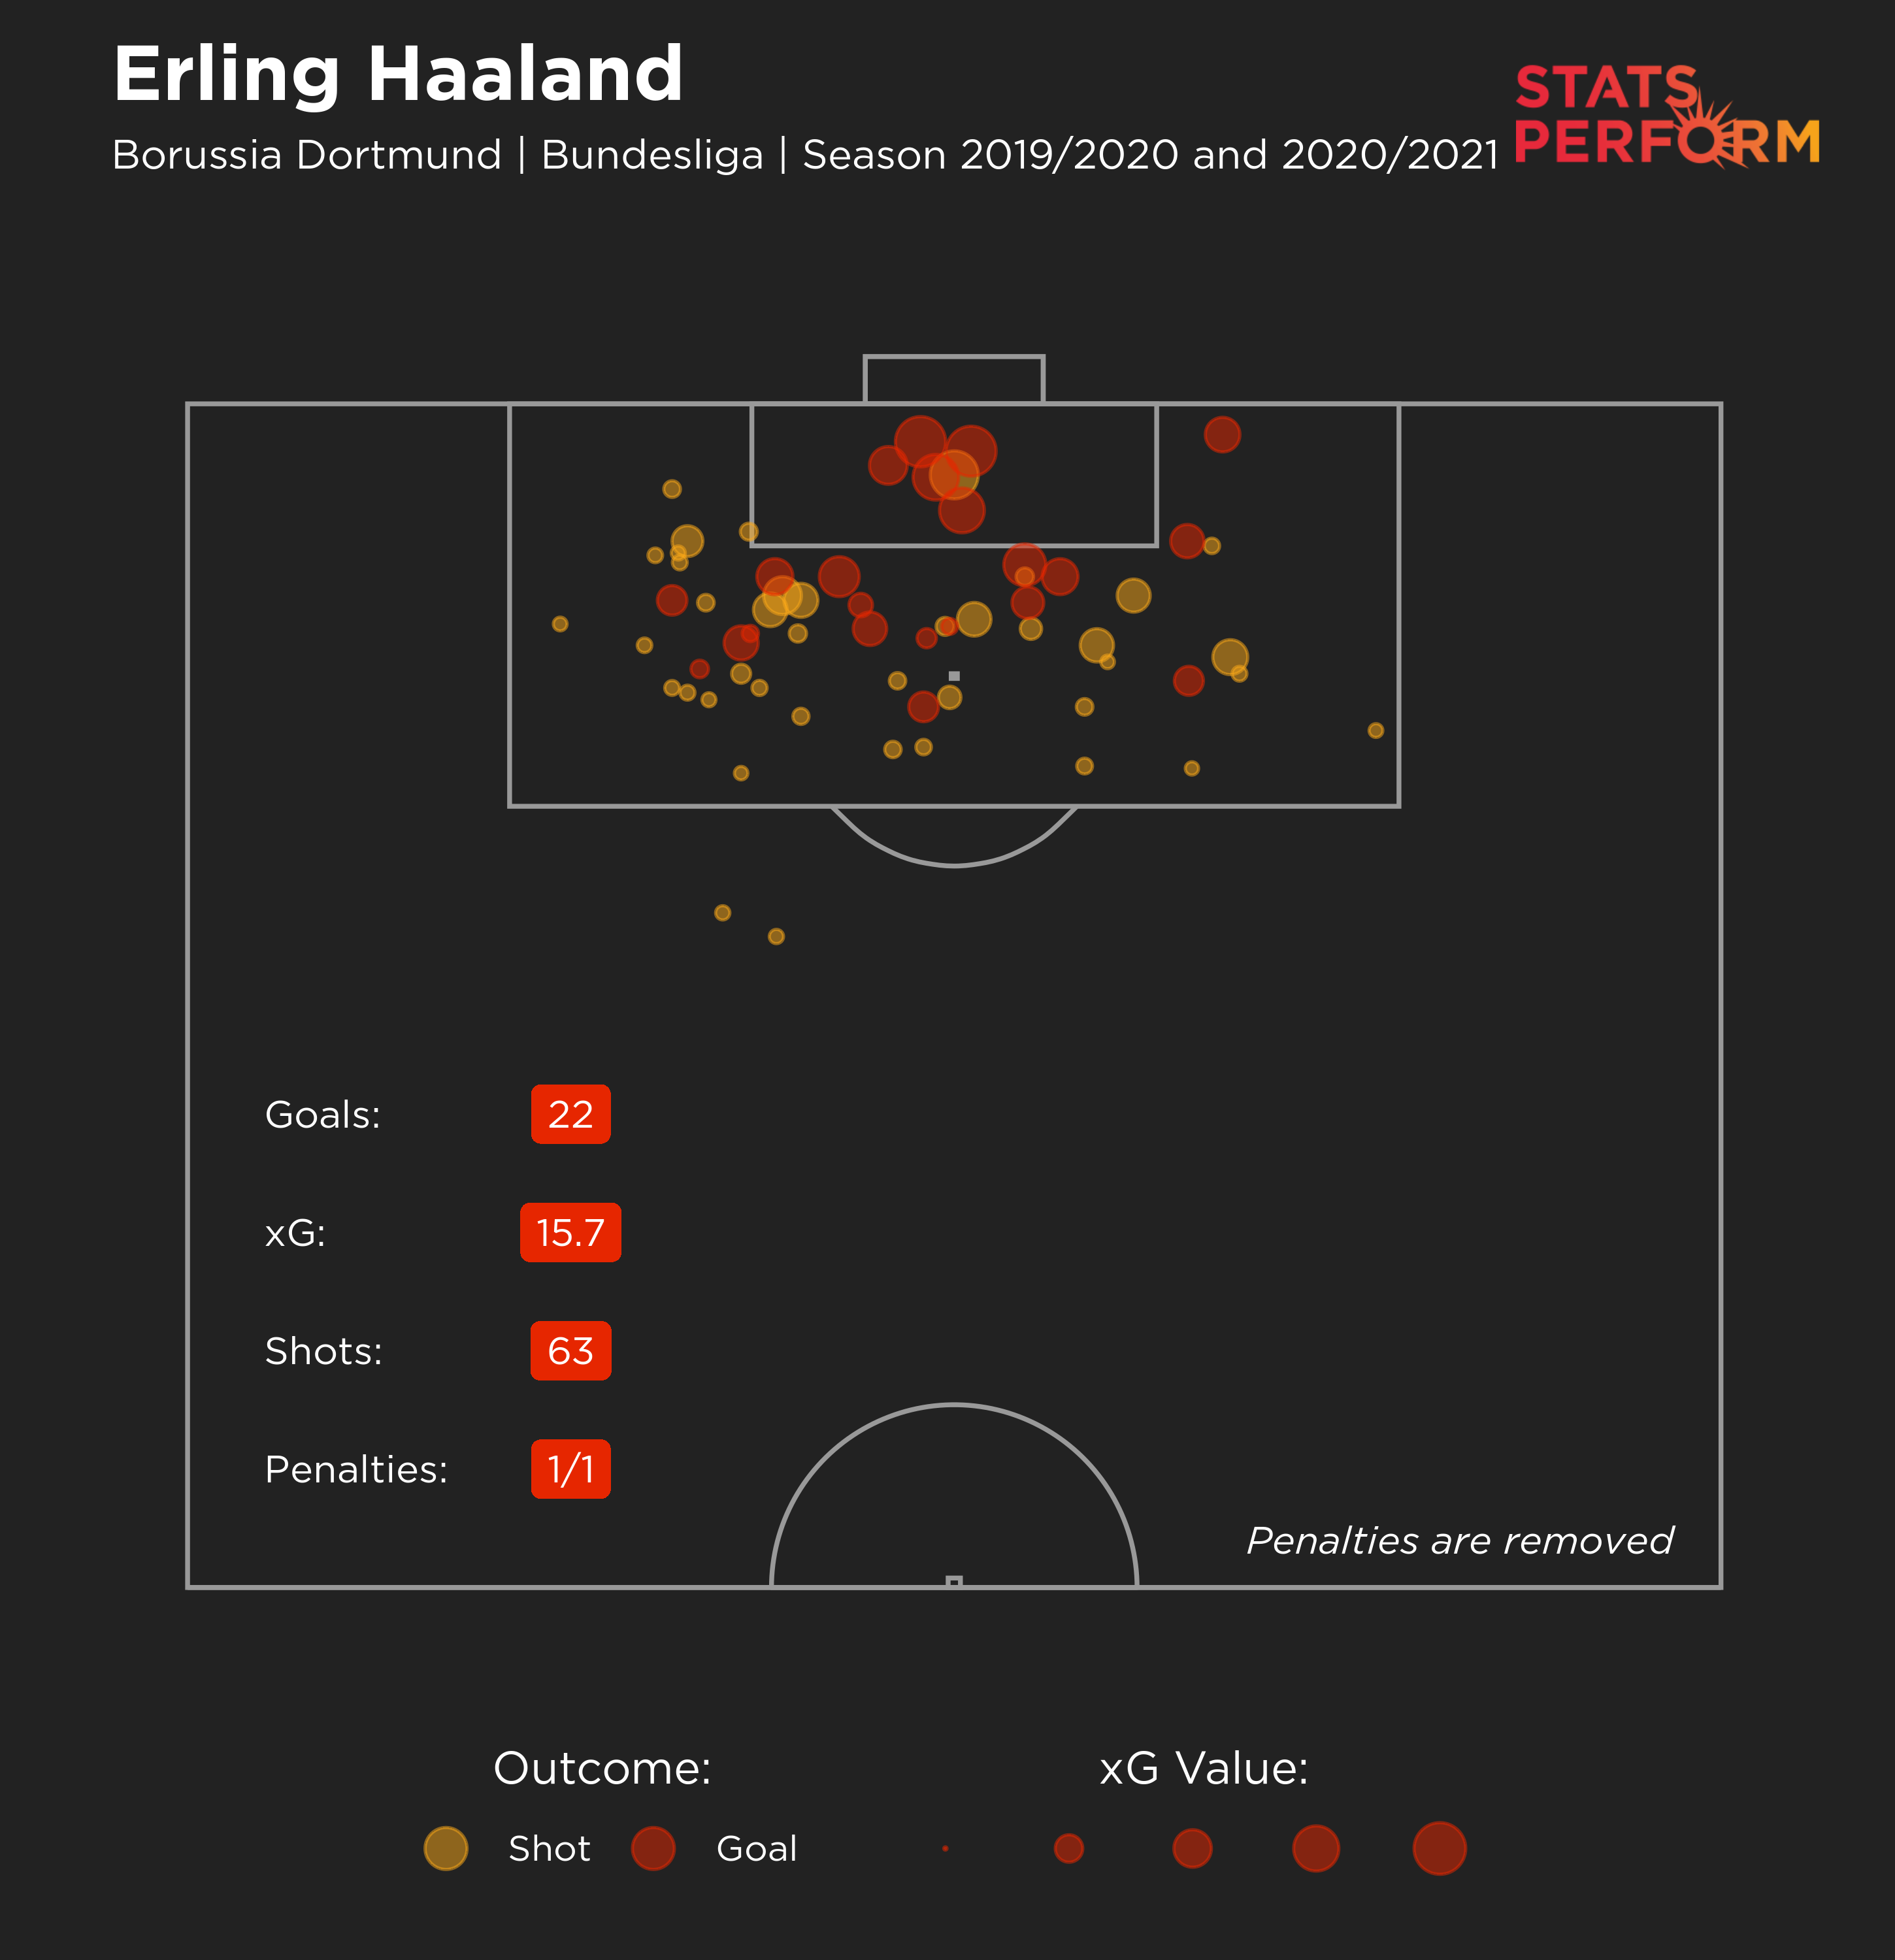 Erling Haaland's expected goals map